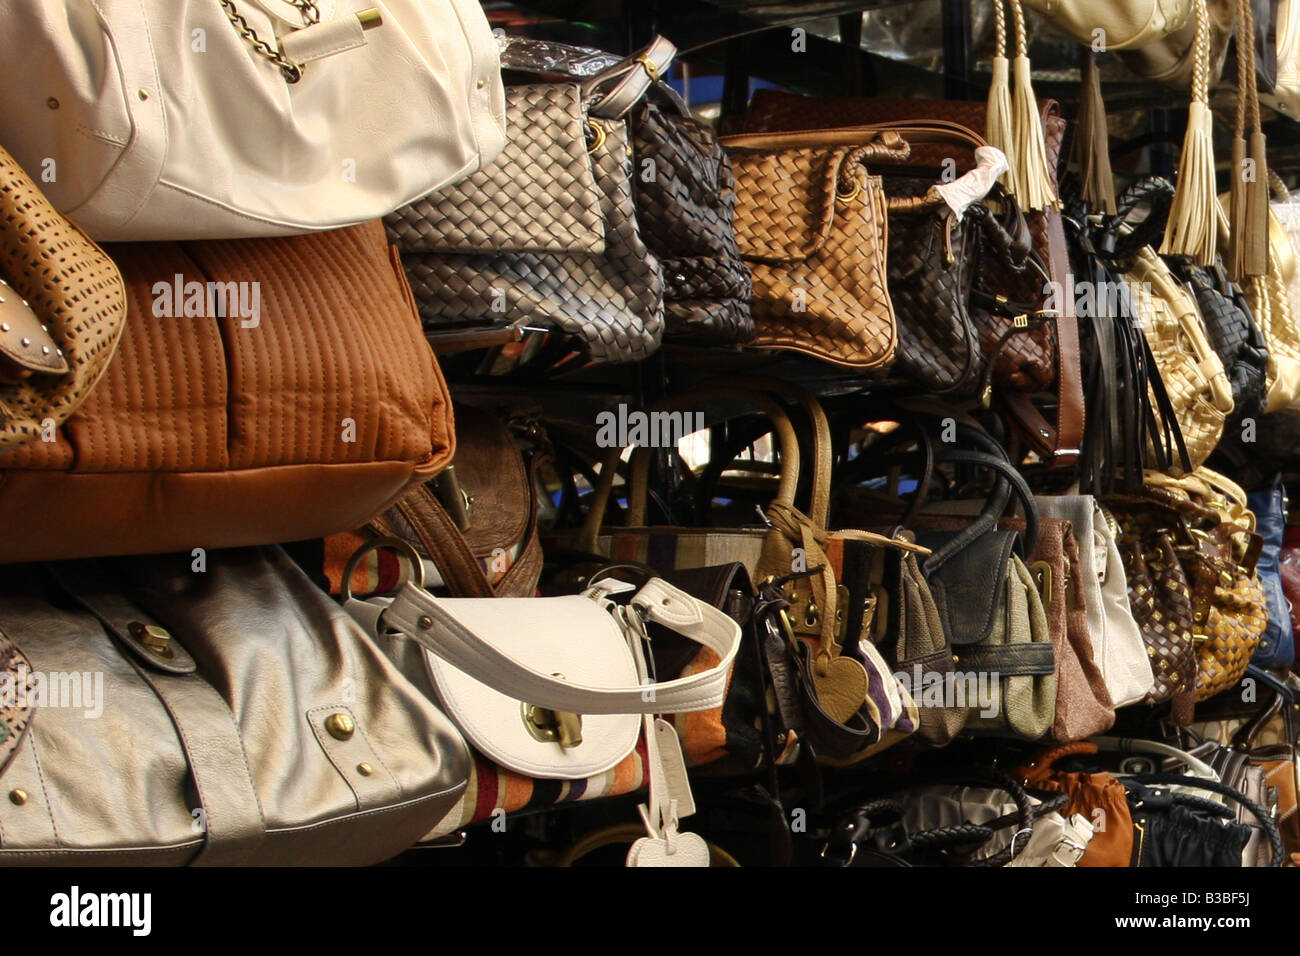 Bangkok, Thailand: Vendor Selling Handbags Editorial Stock Image - Image of  bags, road: 55438234